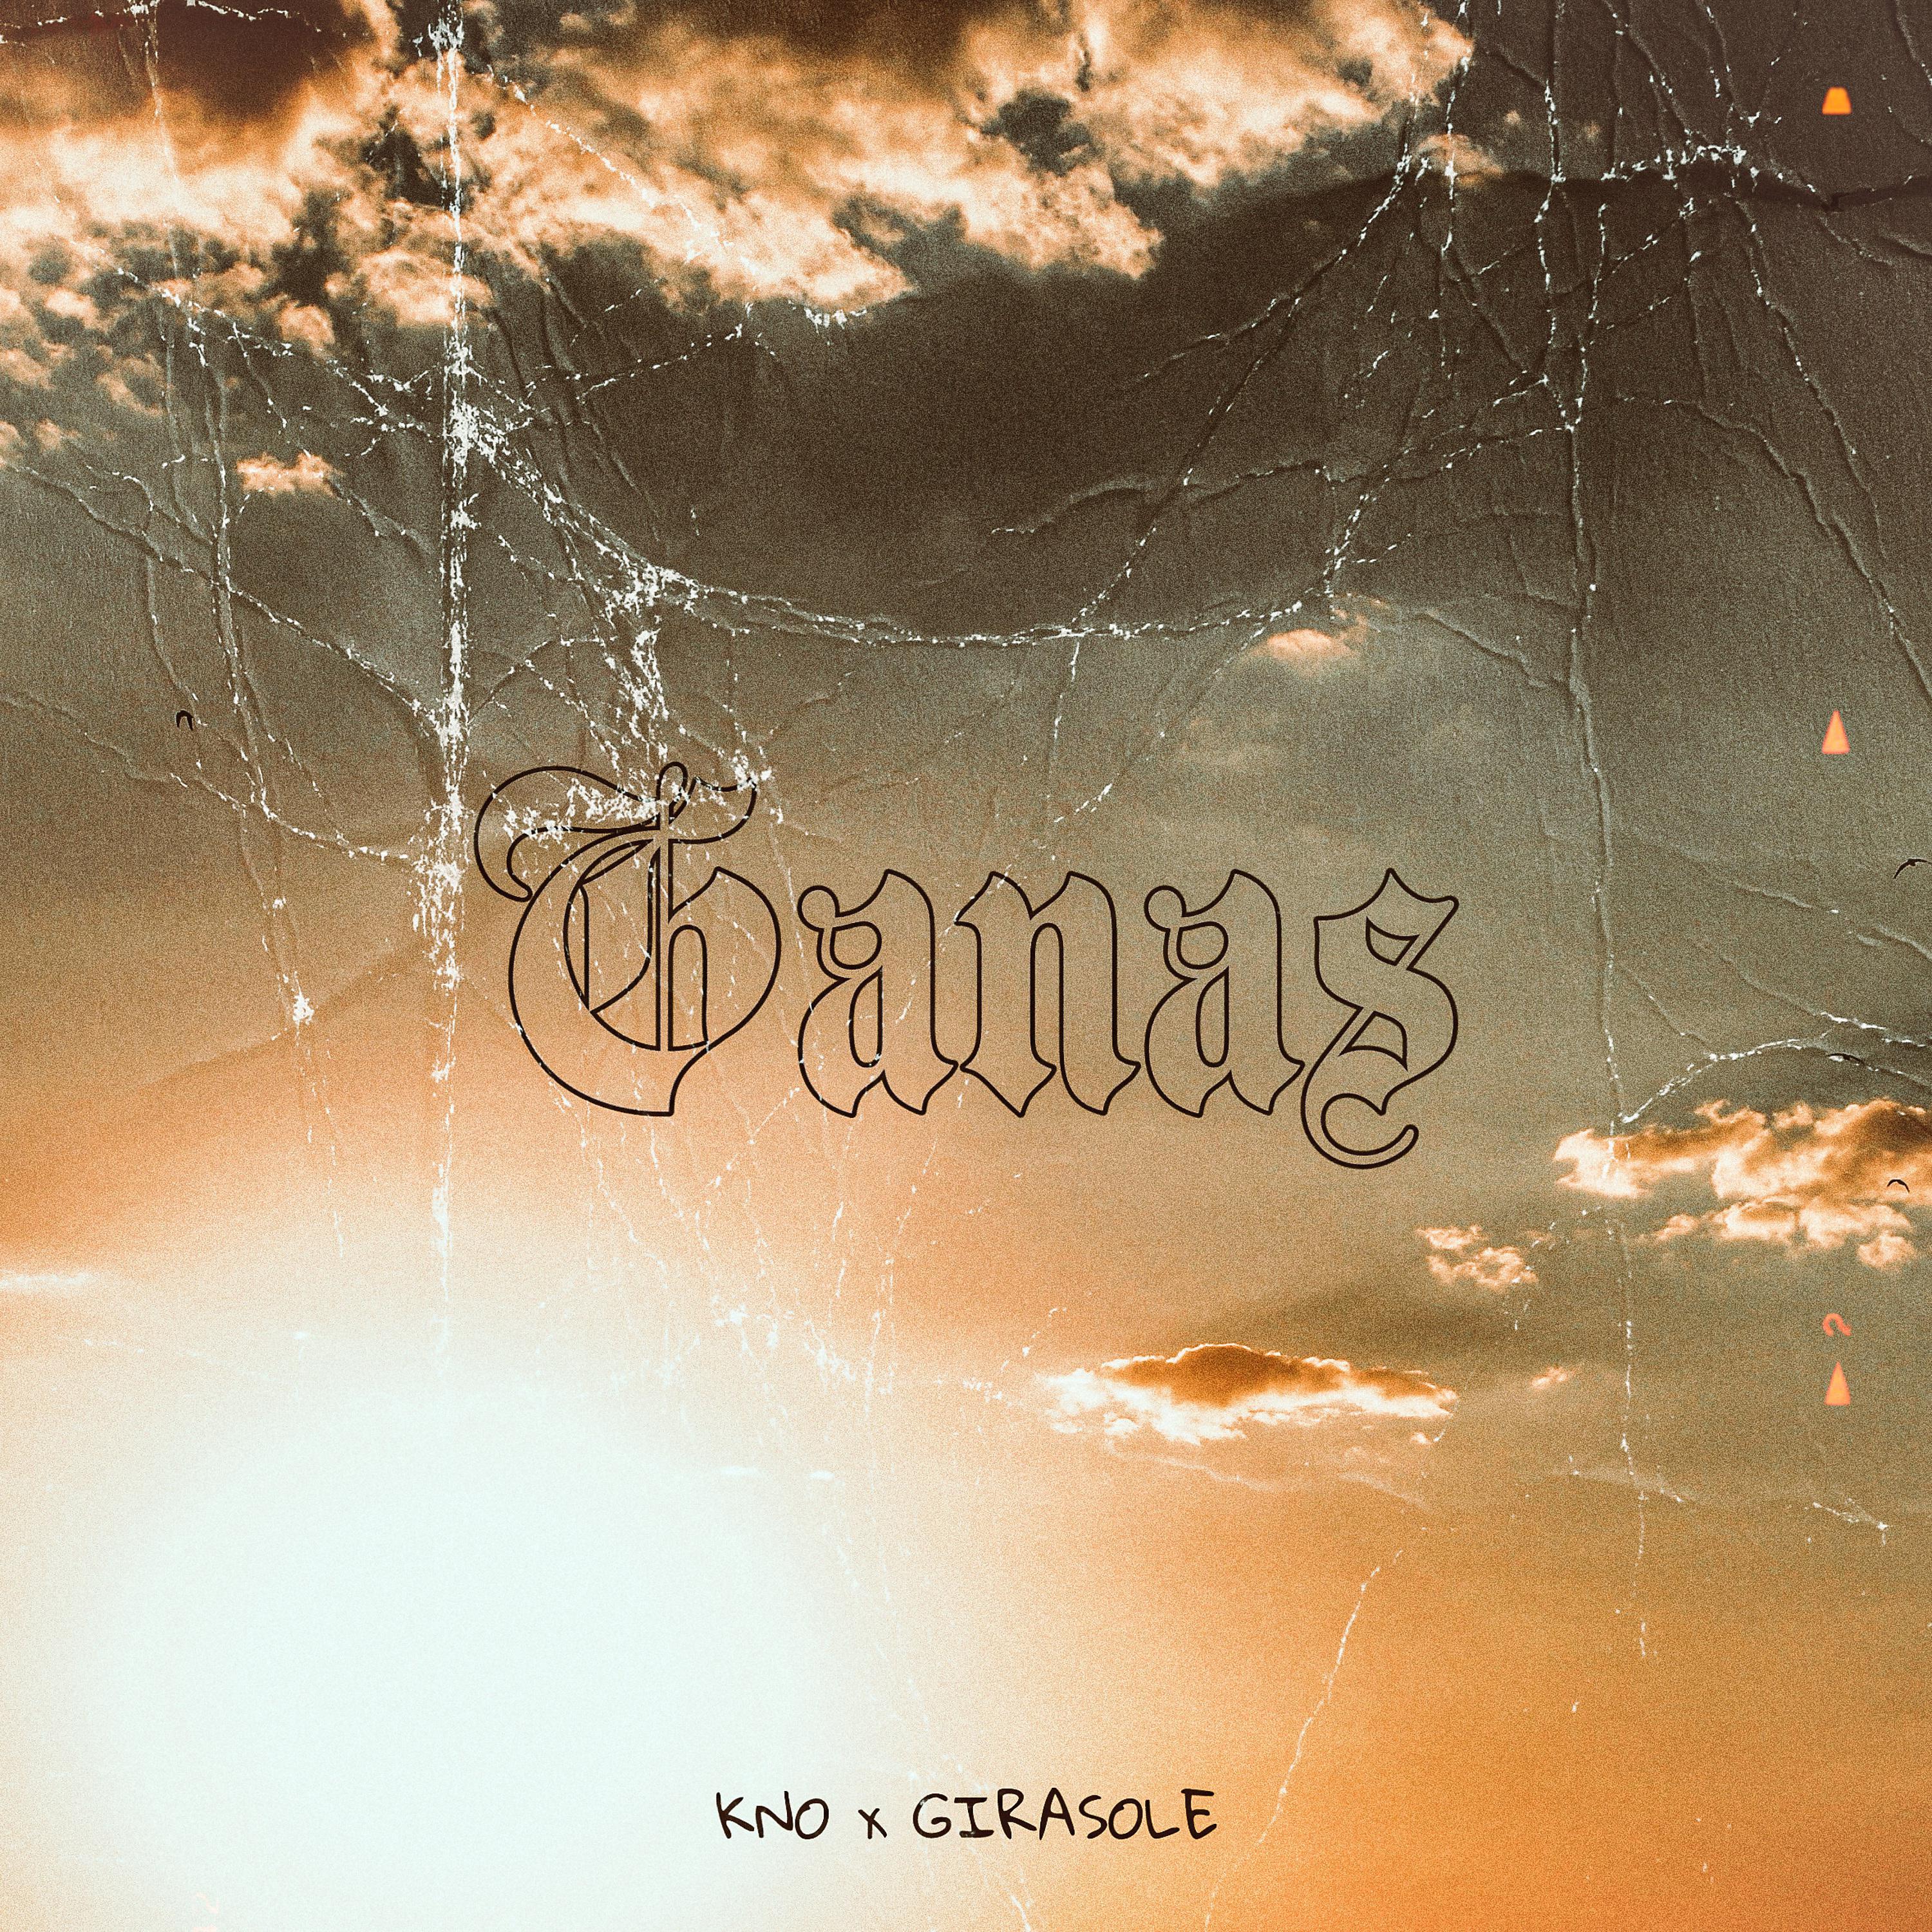 Постер альбома Ganas